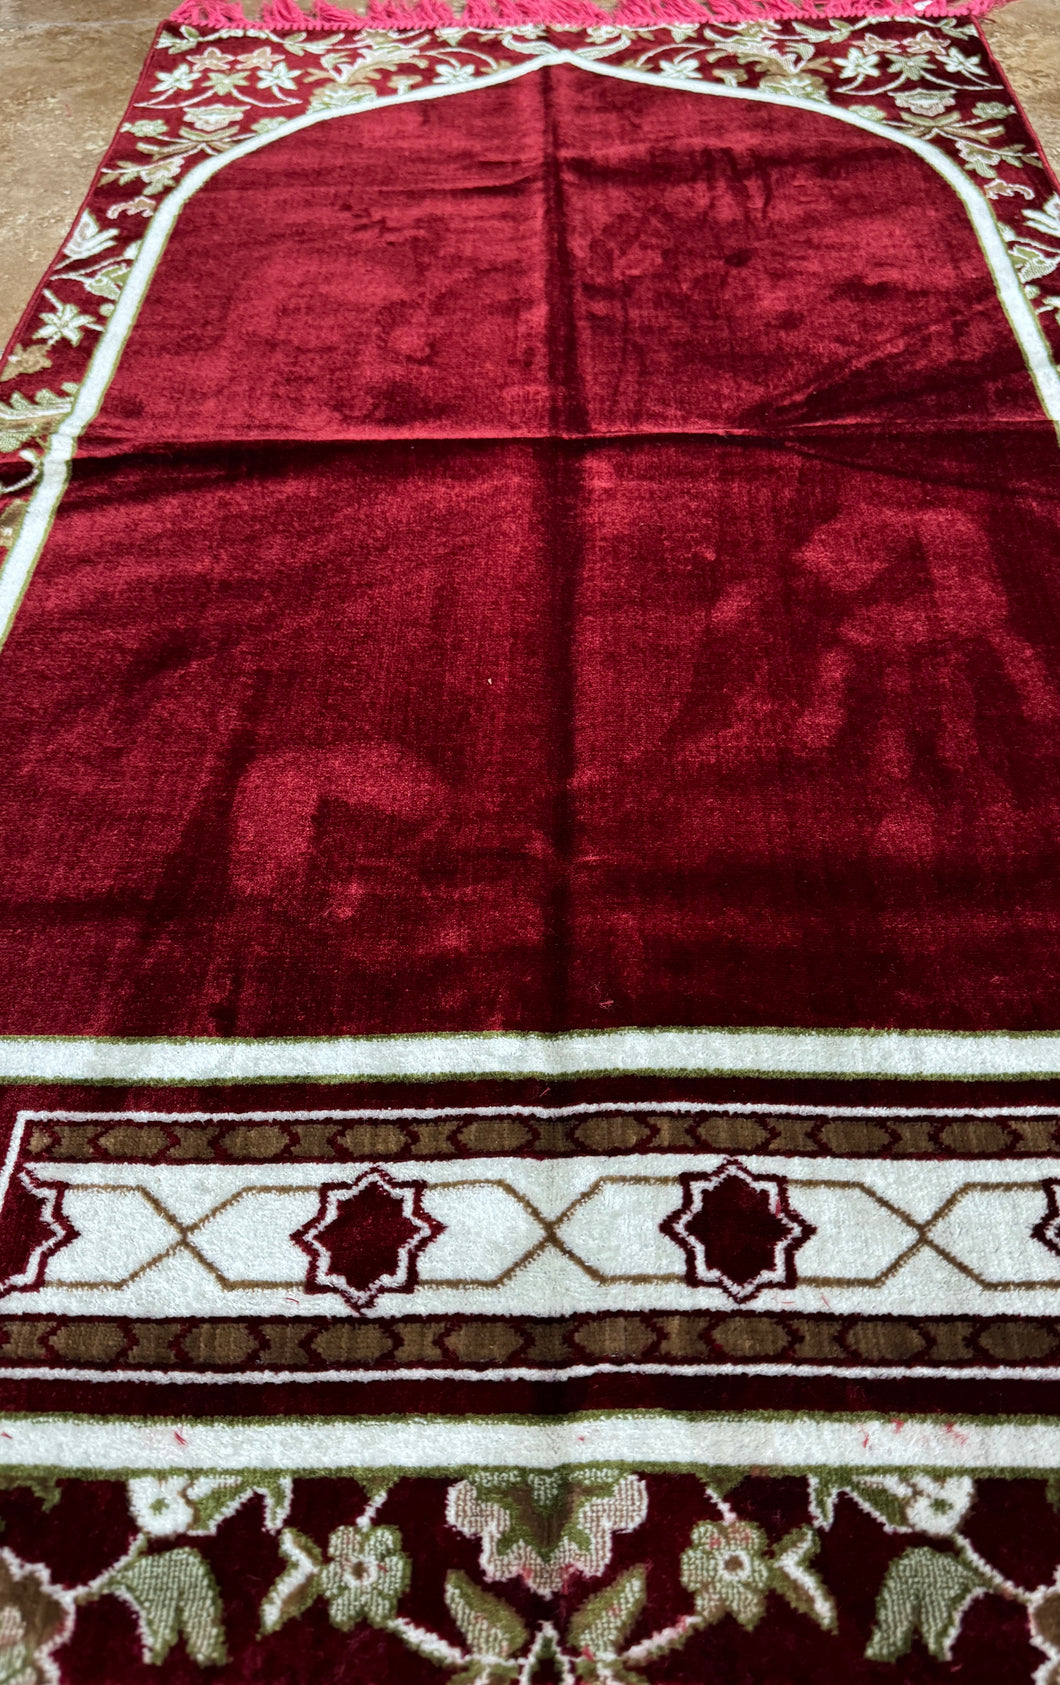 Prayer Rugs (Sajjadah)